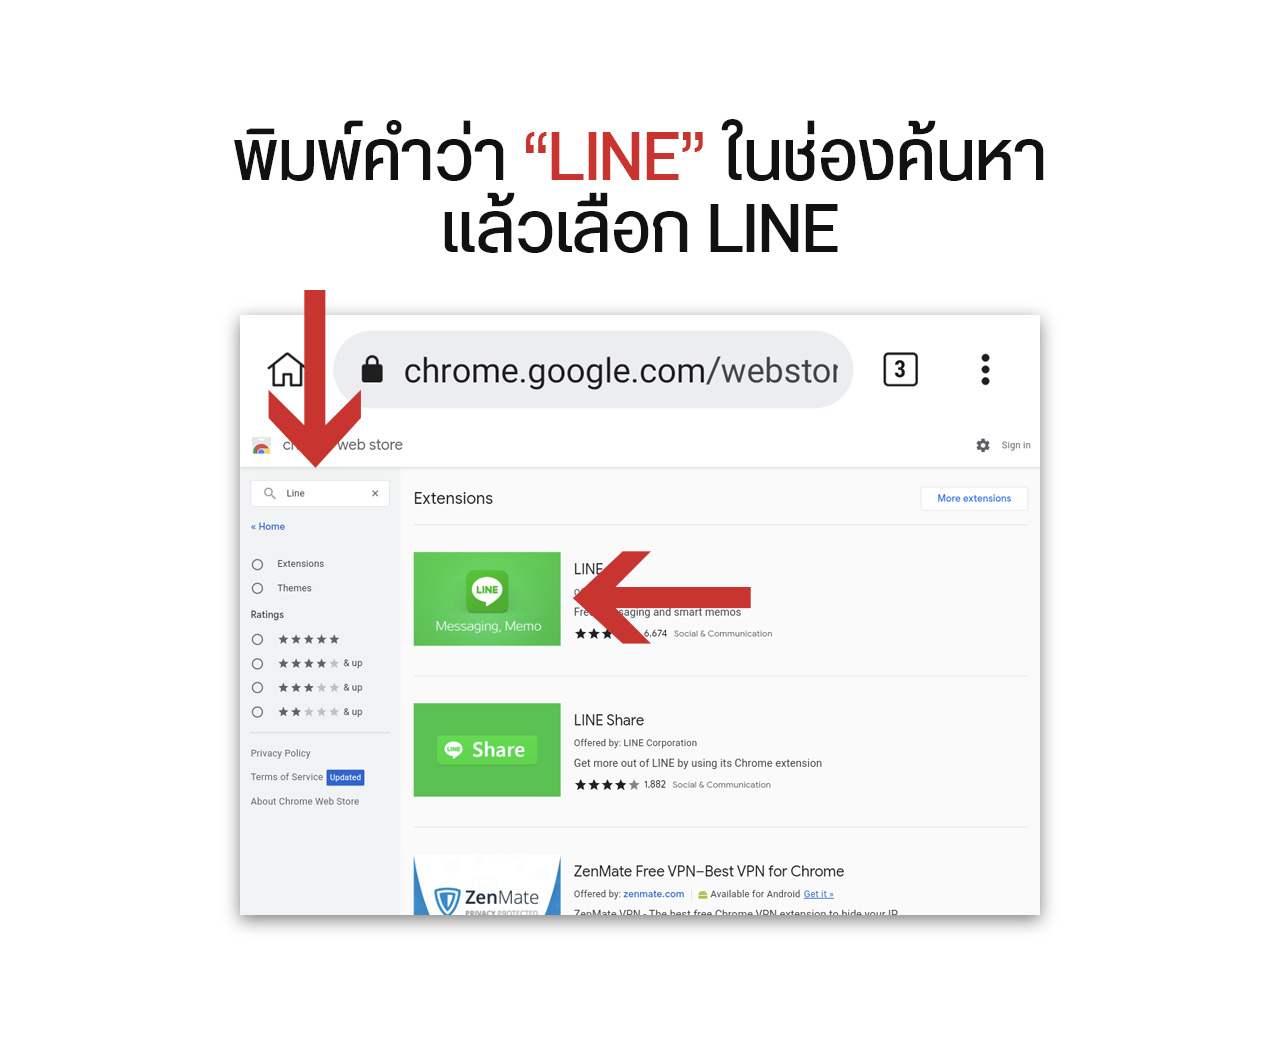 TIPS | วิธีเล่น LINE บัญชีเดียวกัน 2 เครื่อง บน Android ไม่ง้อ LINE Lite